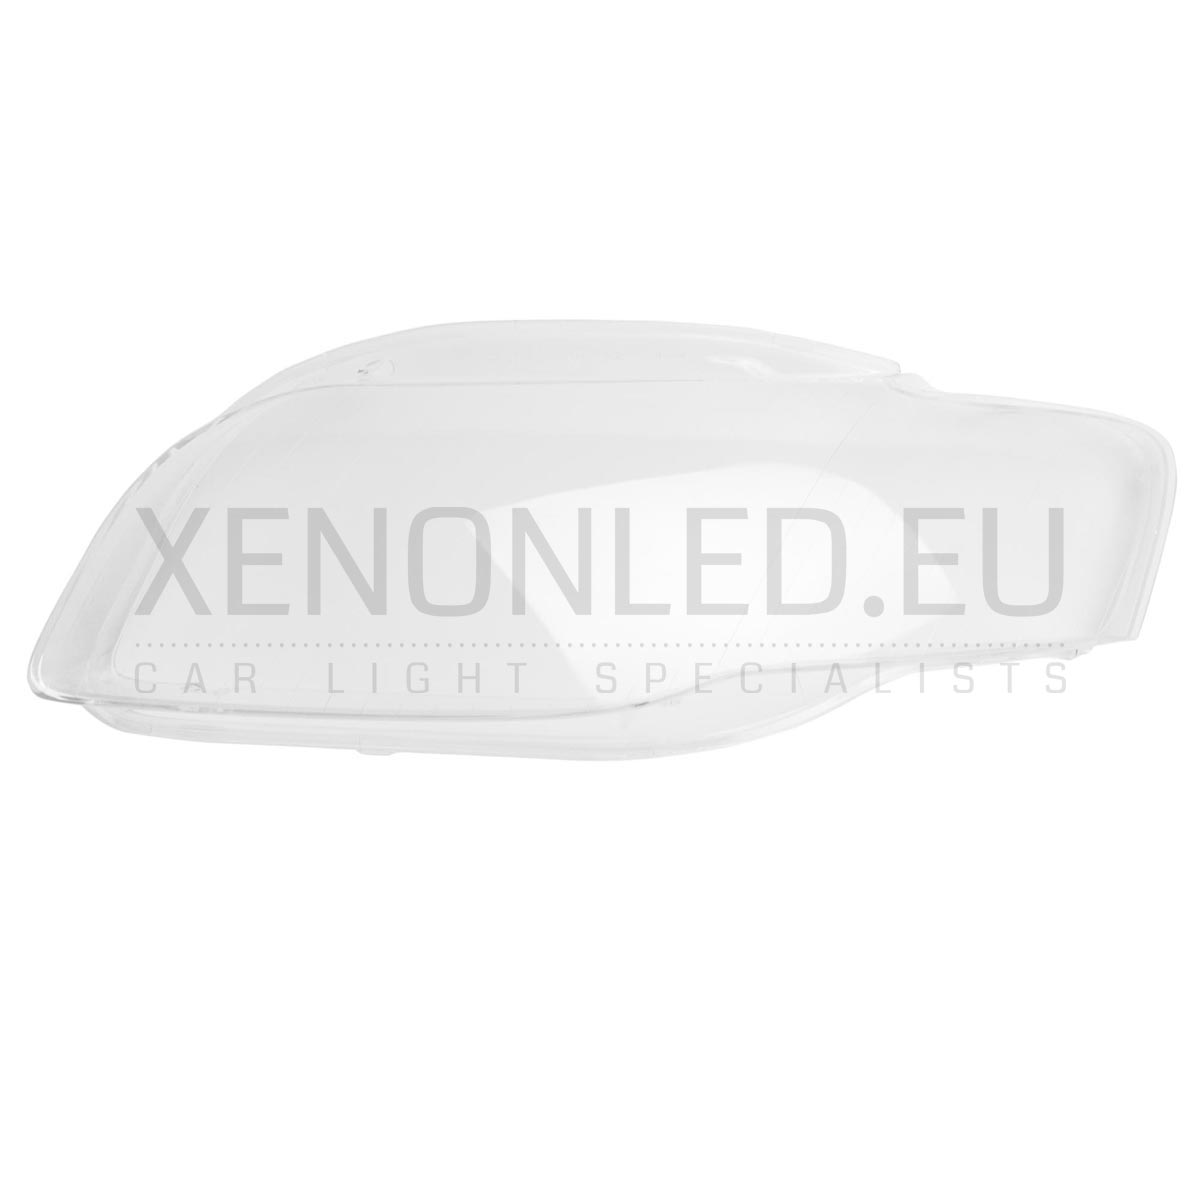 Audi A4 B7 2004 - 2008 Headlight Lens Cover Left Side - Xenonled.eu